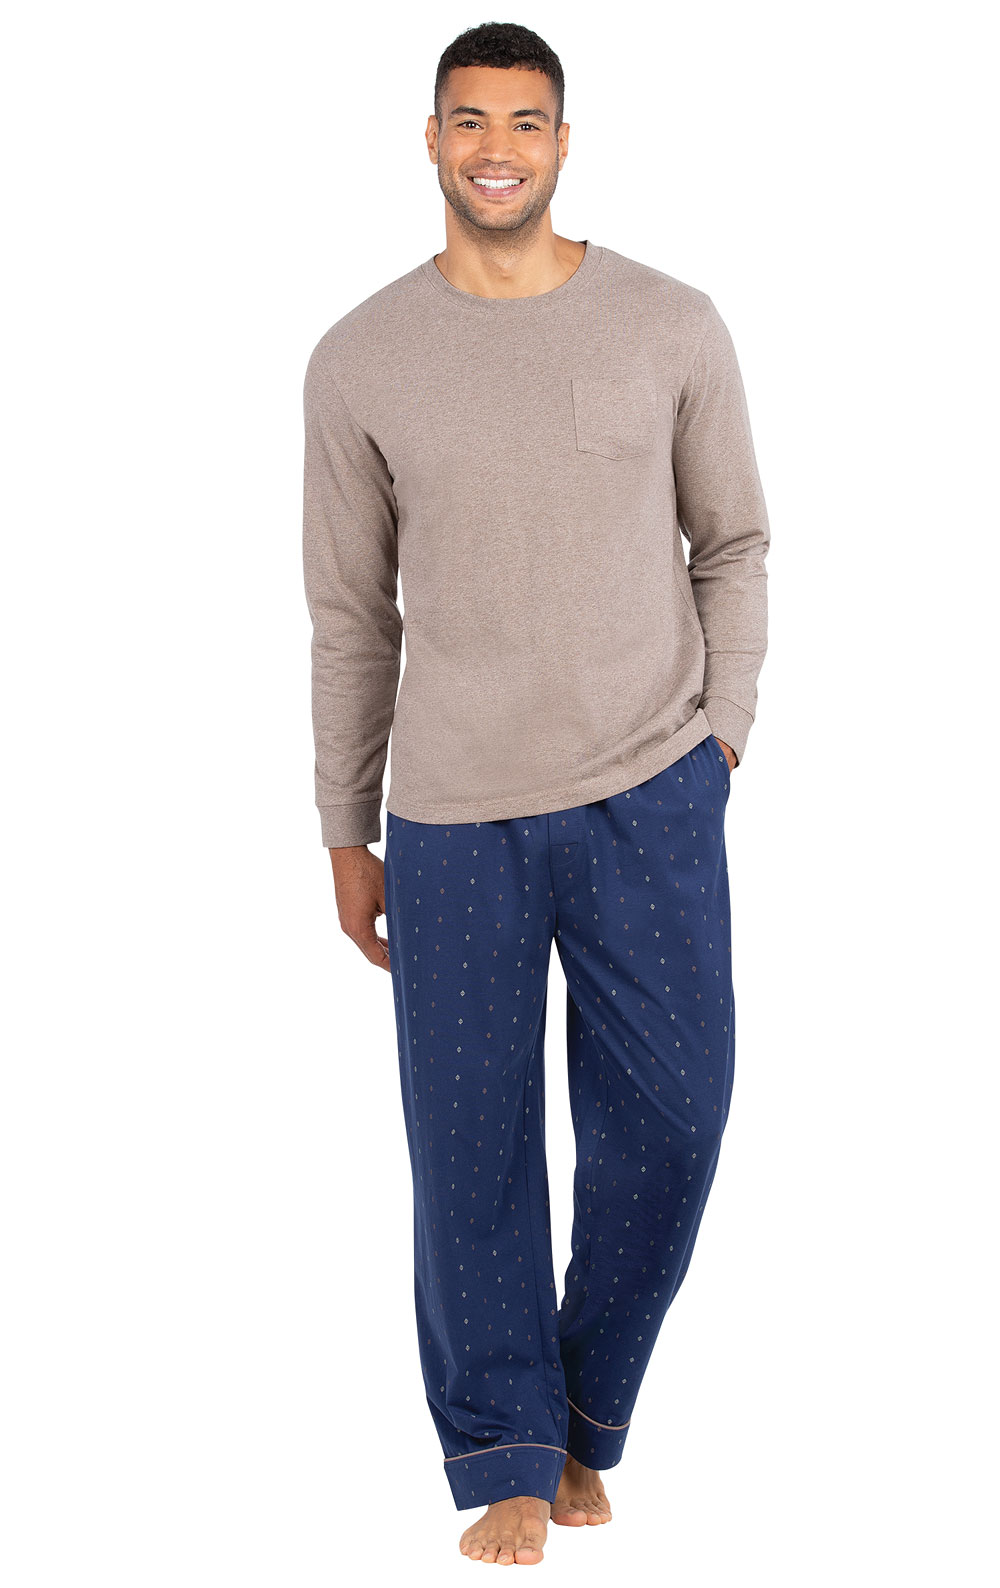 Men's Long Sleeve Striped Pajamas - Charcoal in Men's Cotton Pajamas, Pajamas for Men